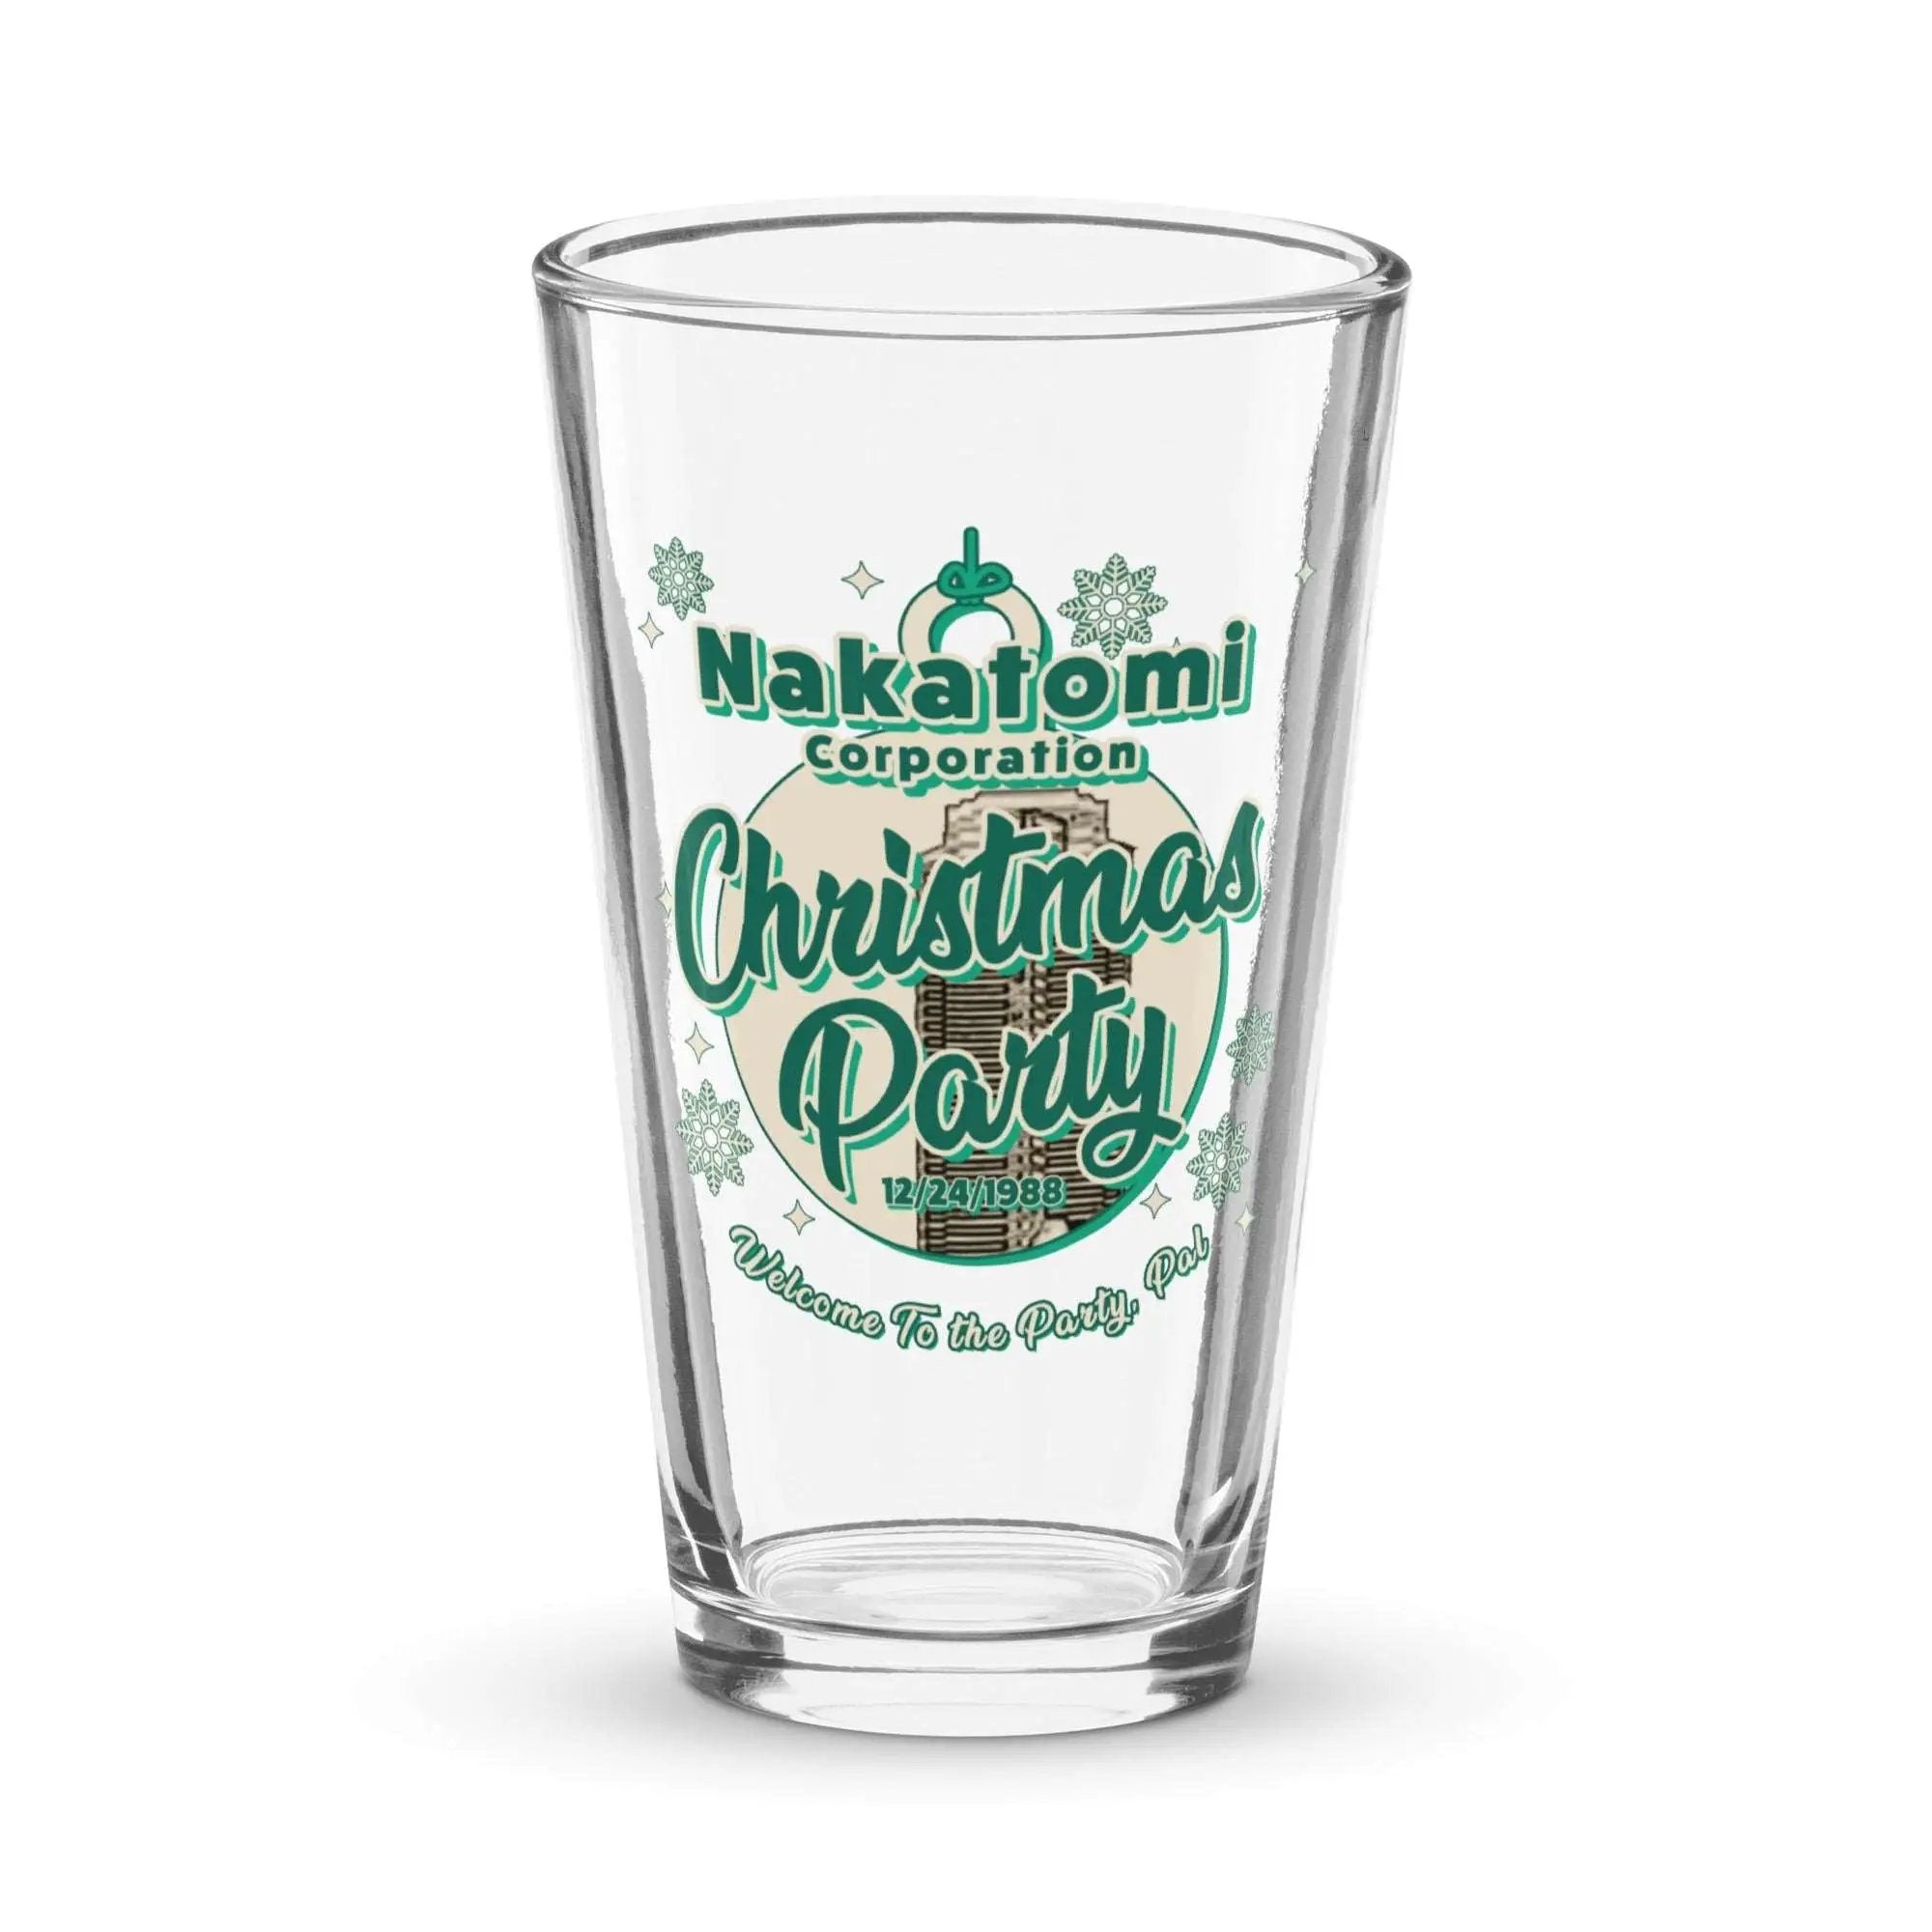 Nakatomi Christmas Party Shaker pint glass